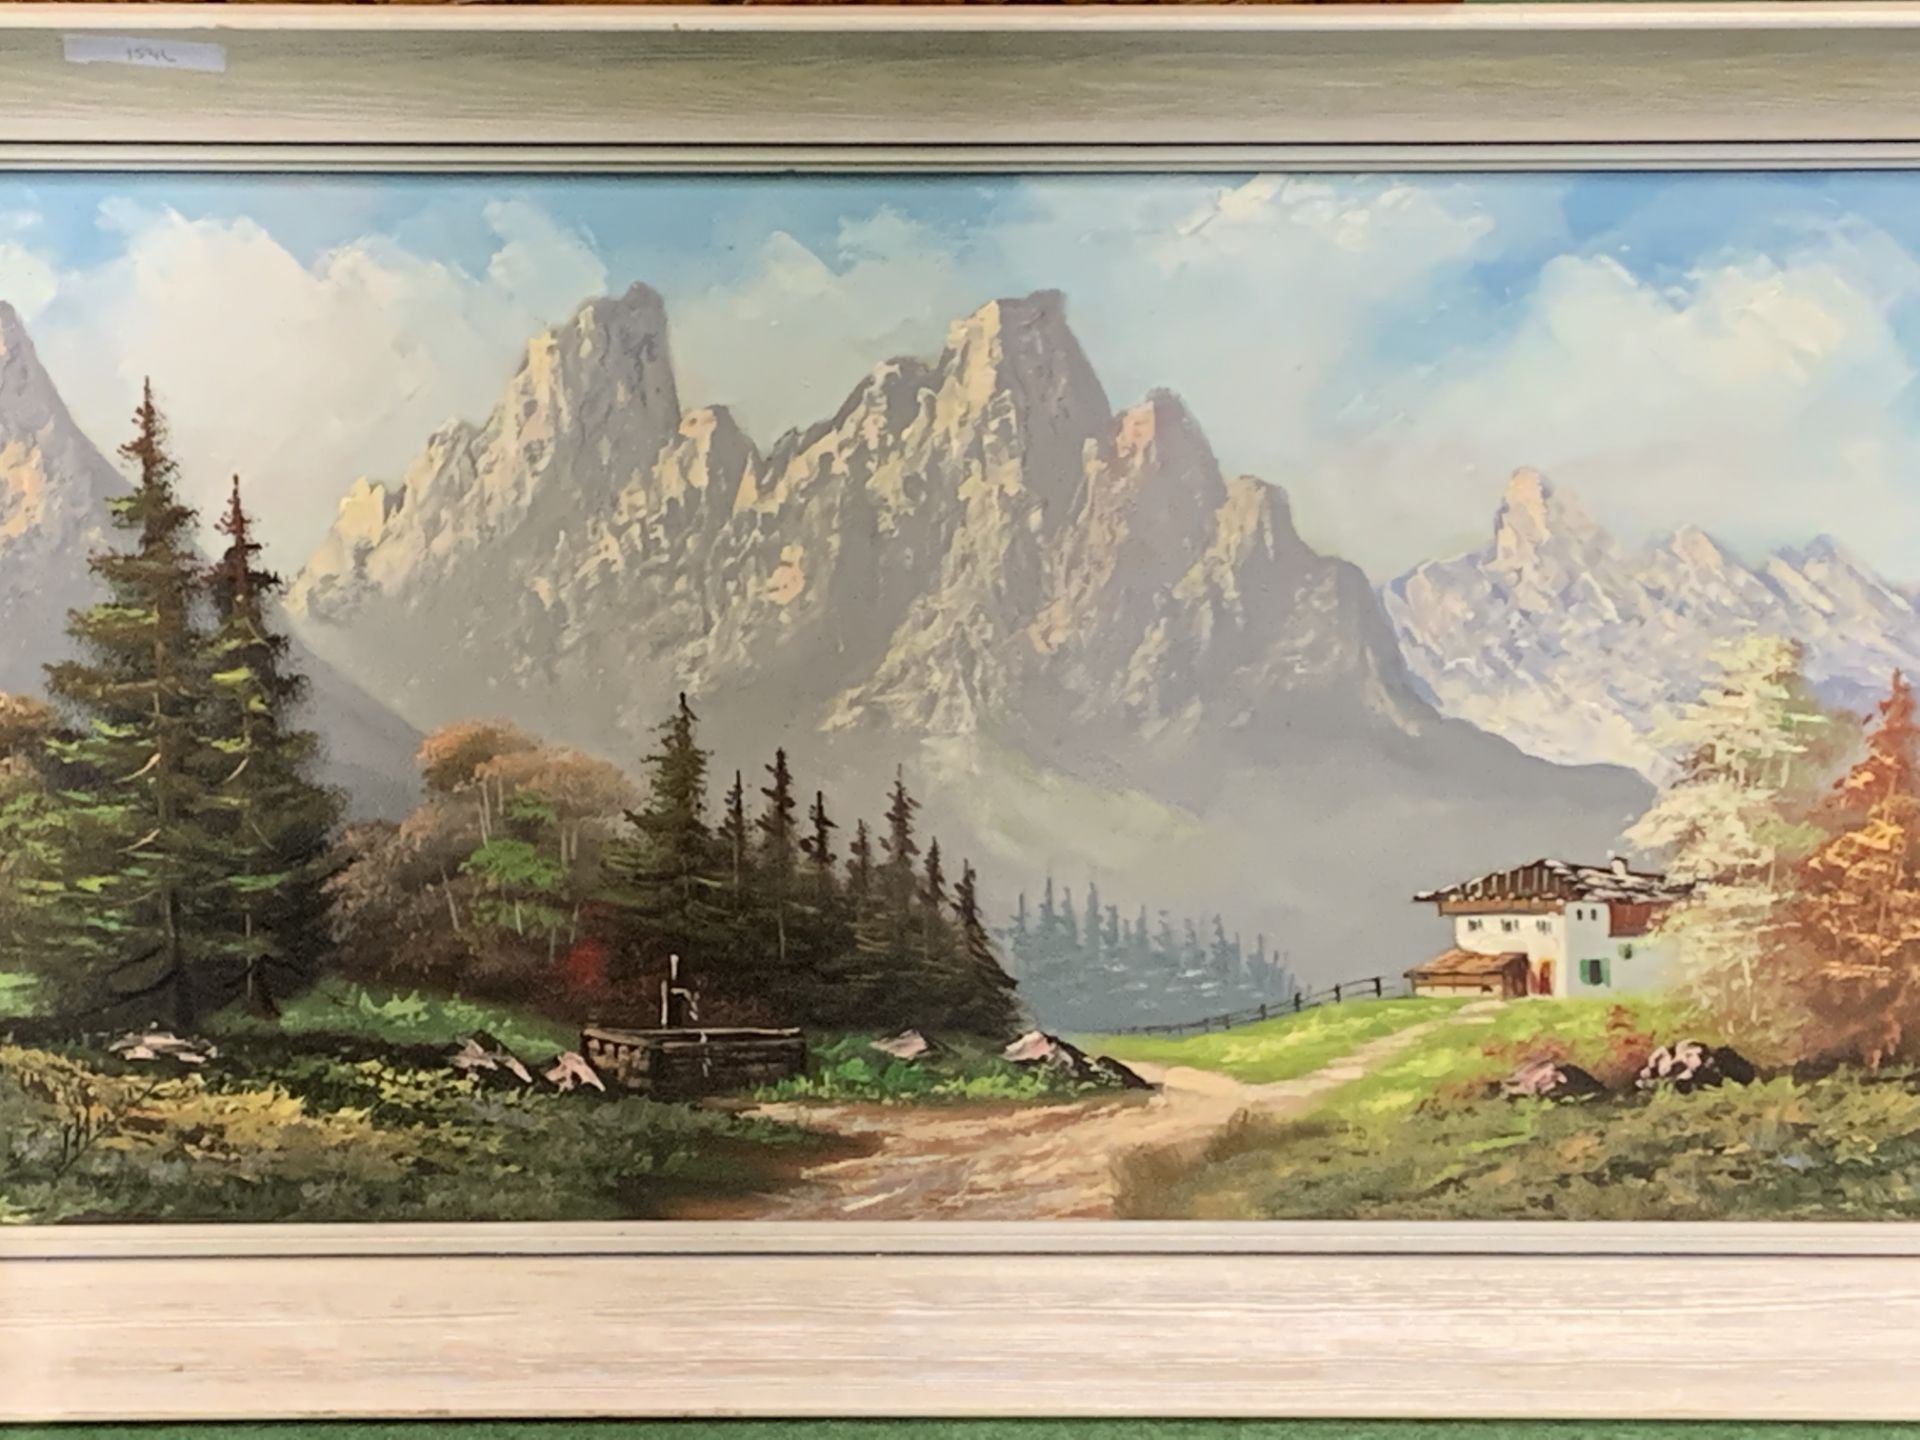 Framed oil on canvas of a mountain scene